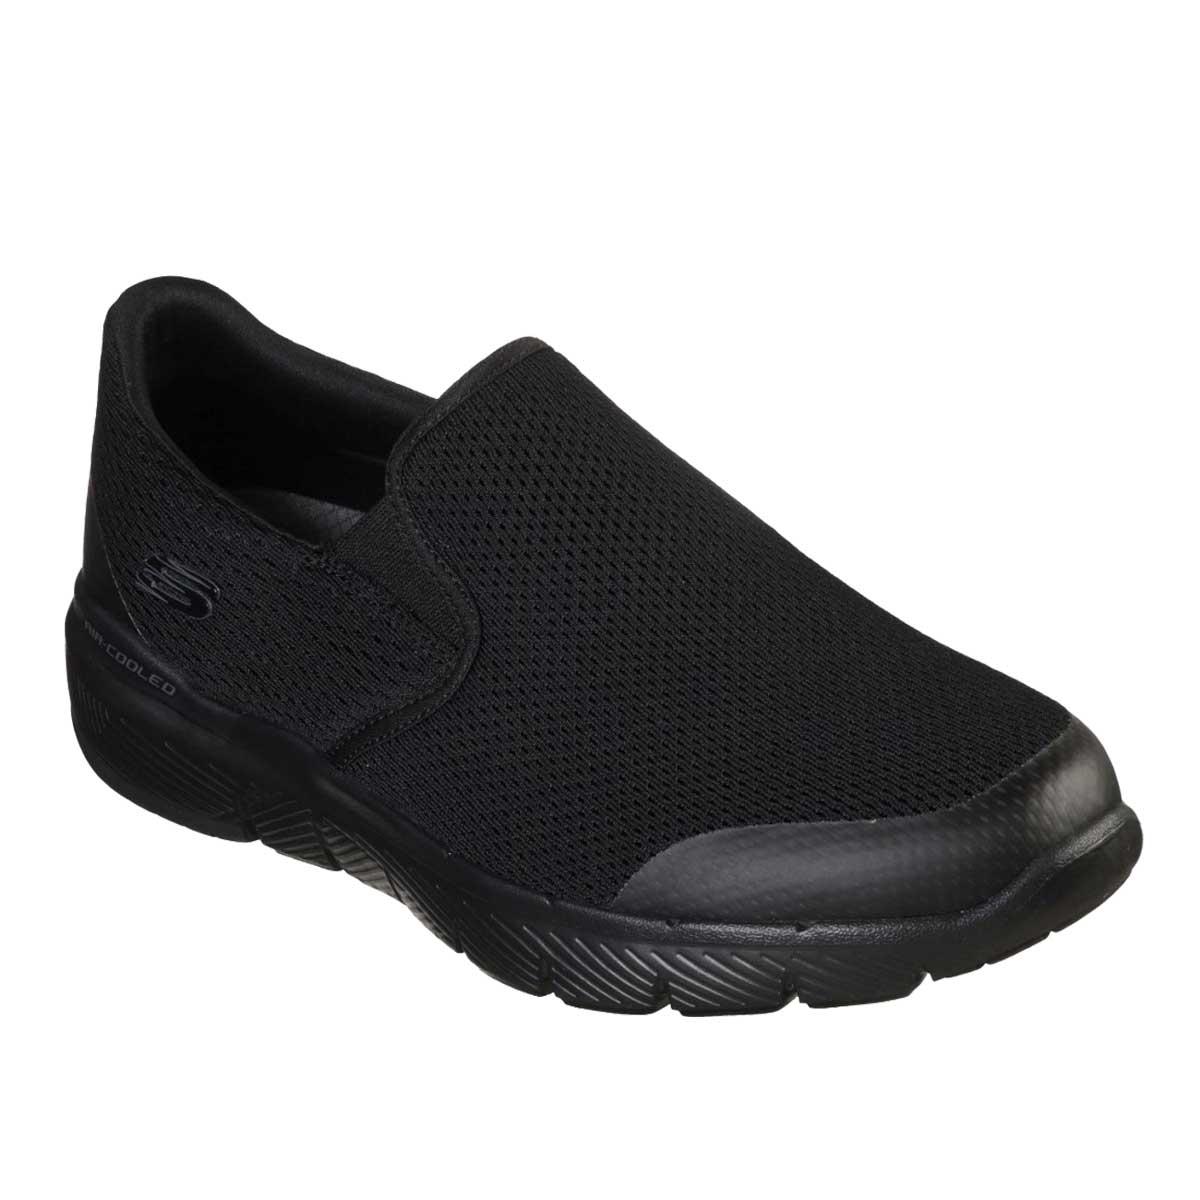 Buy Skechers Air Cooled Memory Foam Running Shoes (Black) Online India